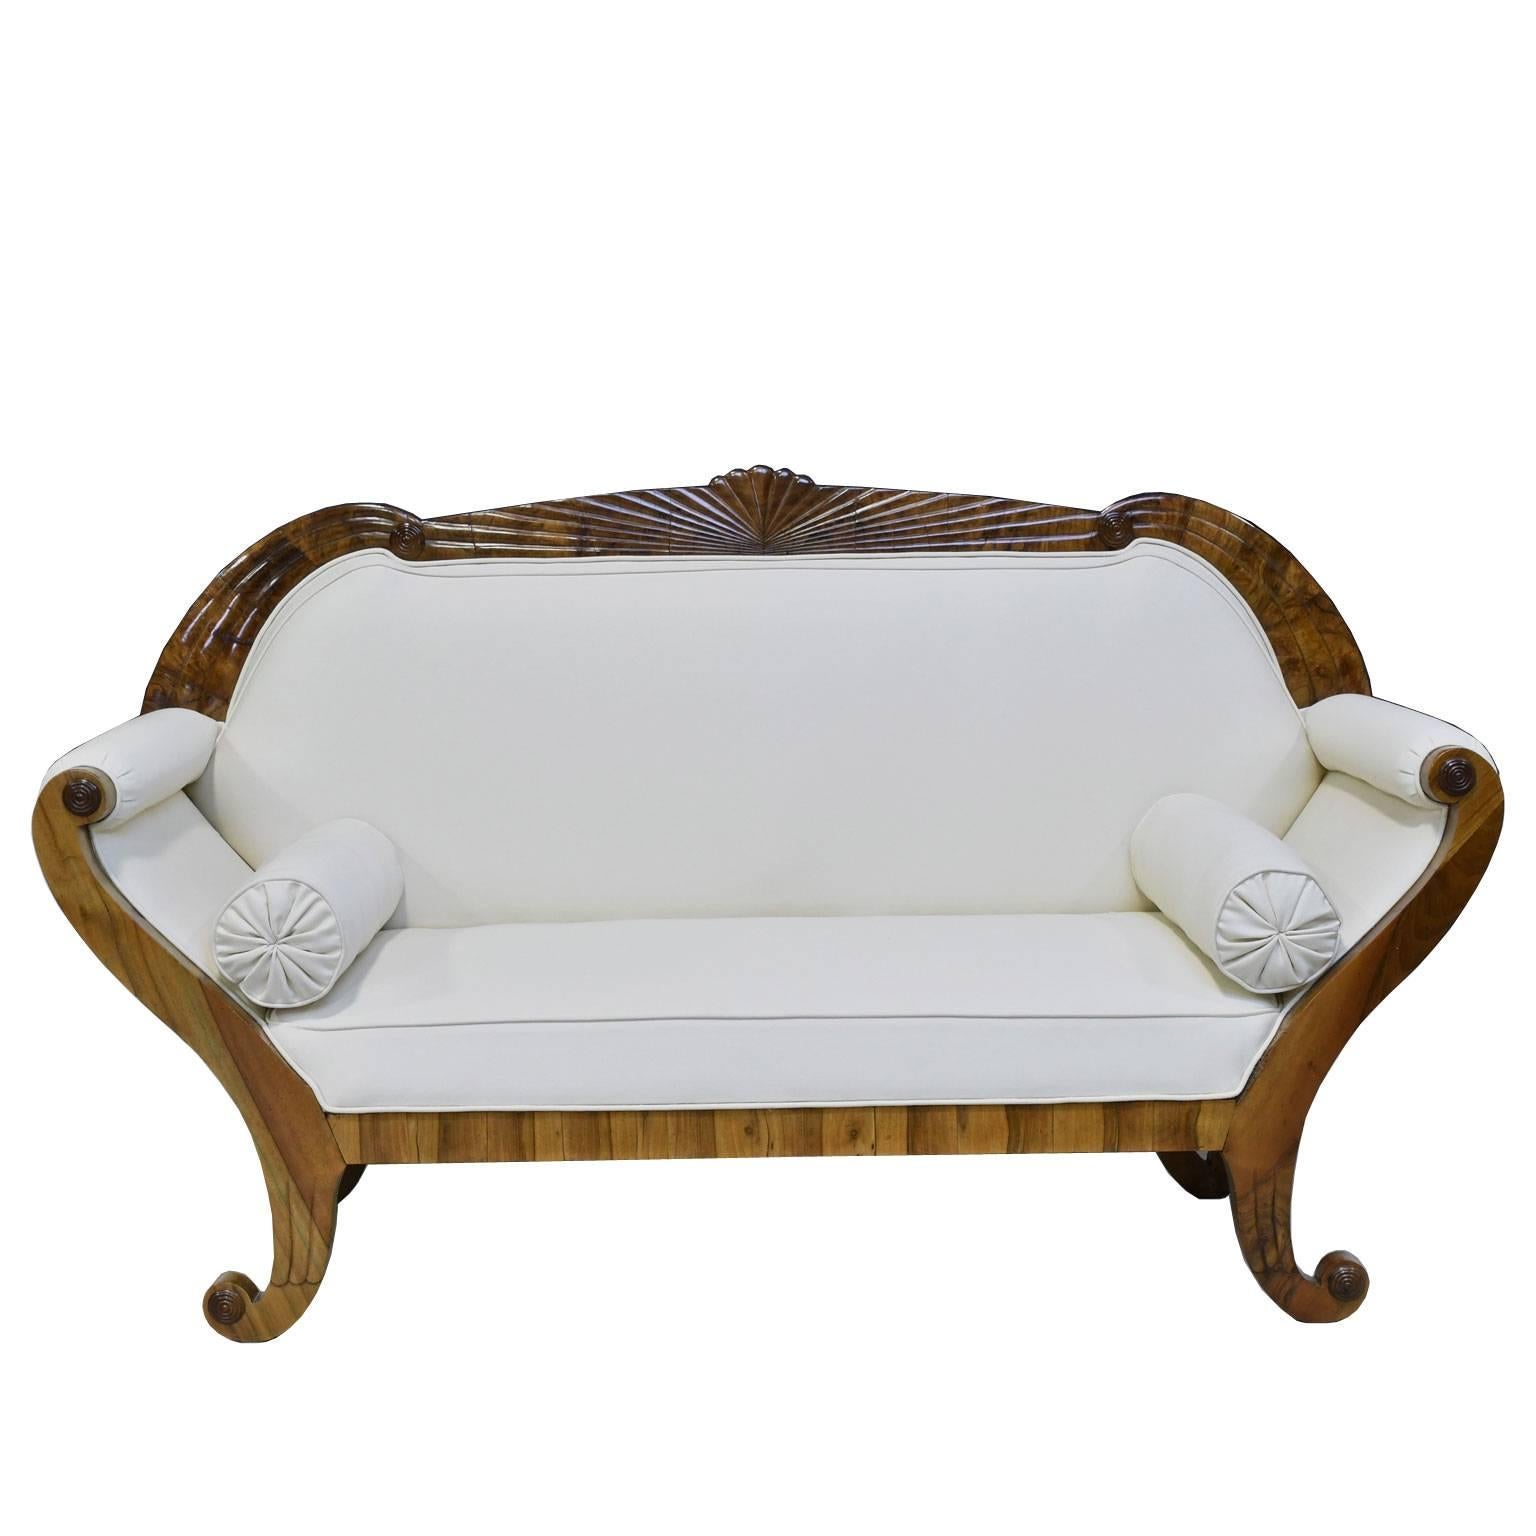 South German Biedermeier Sofa in Walnut with Fan-Carved Crest, circa 1830